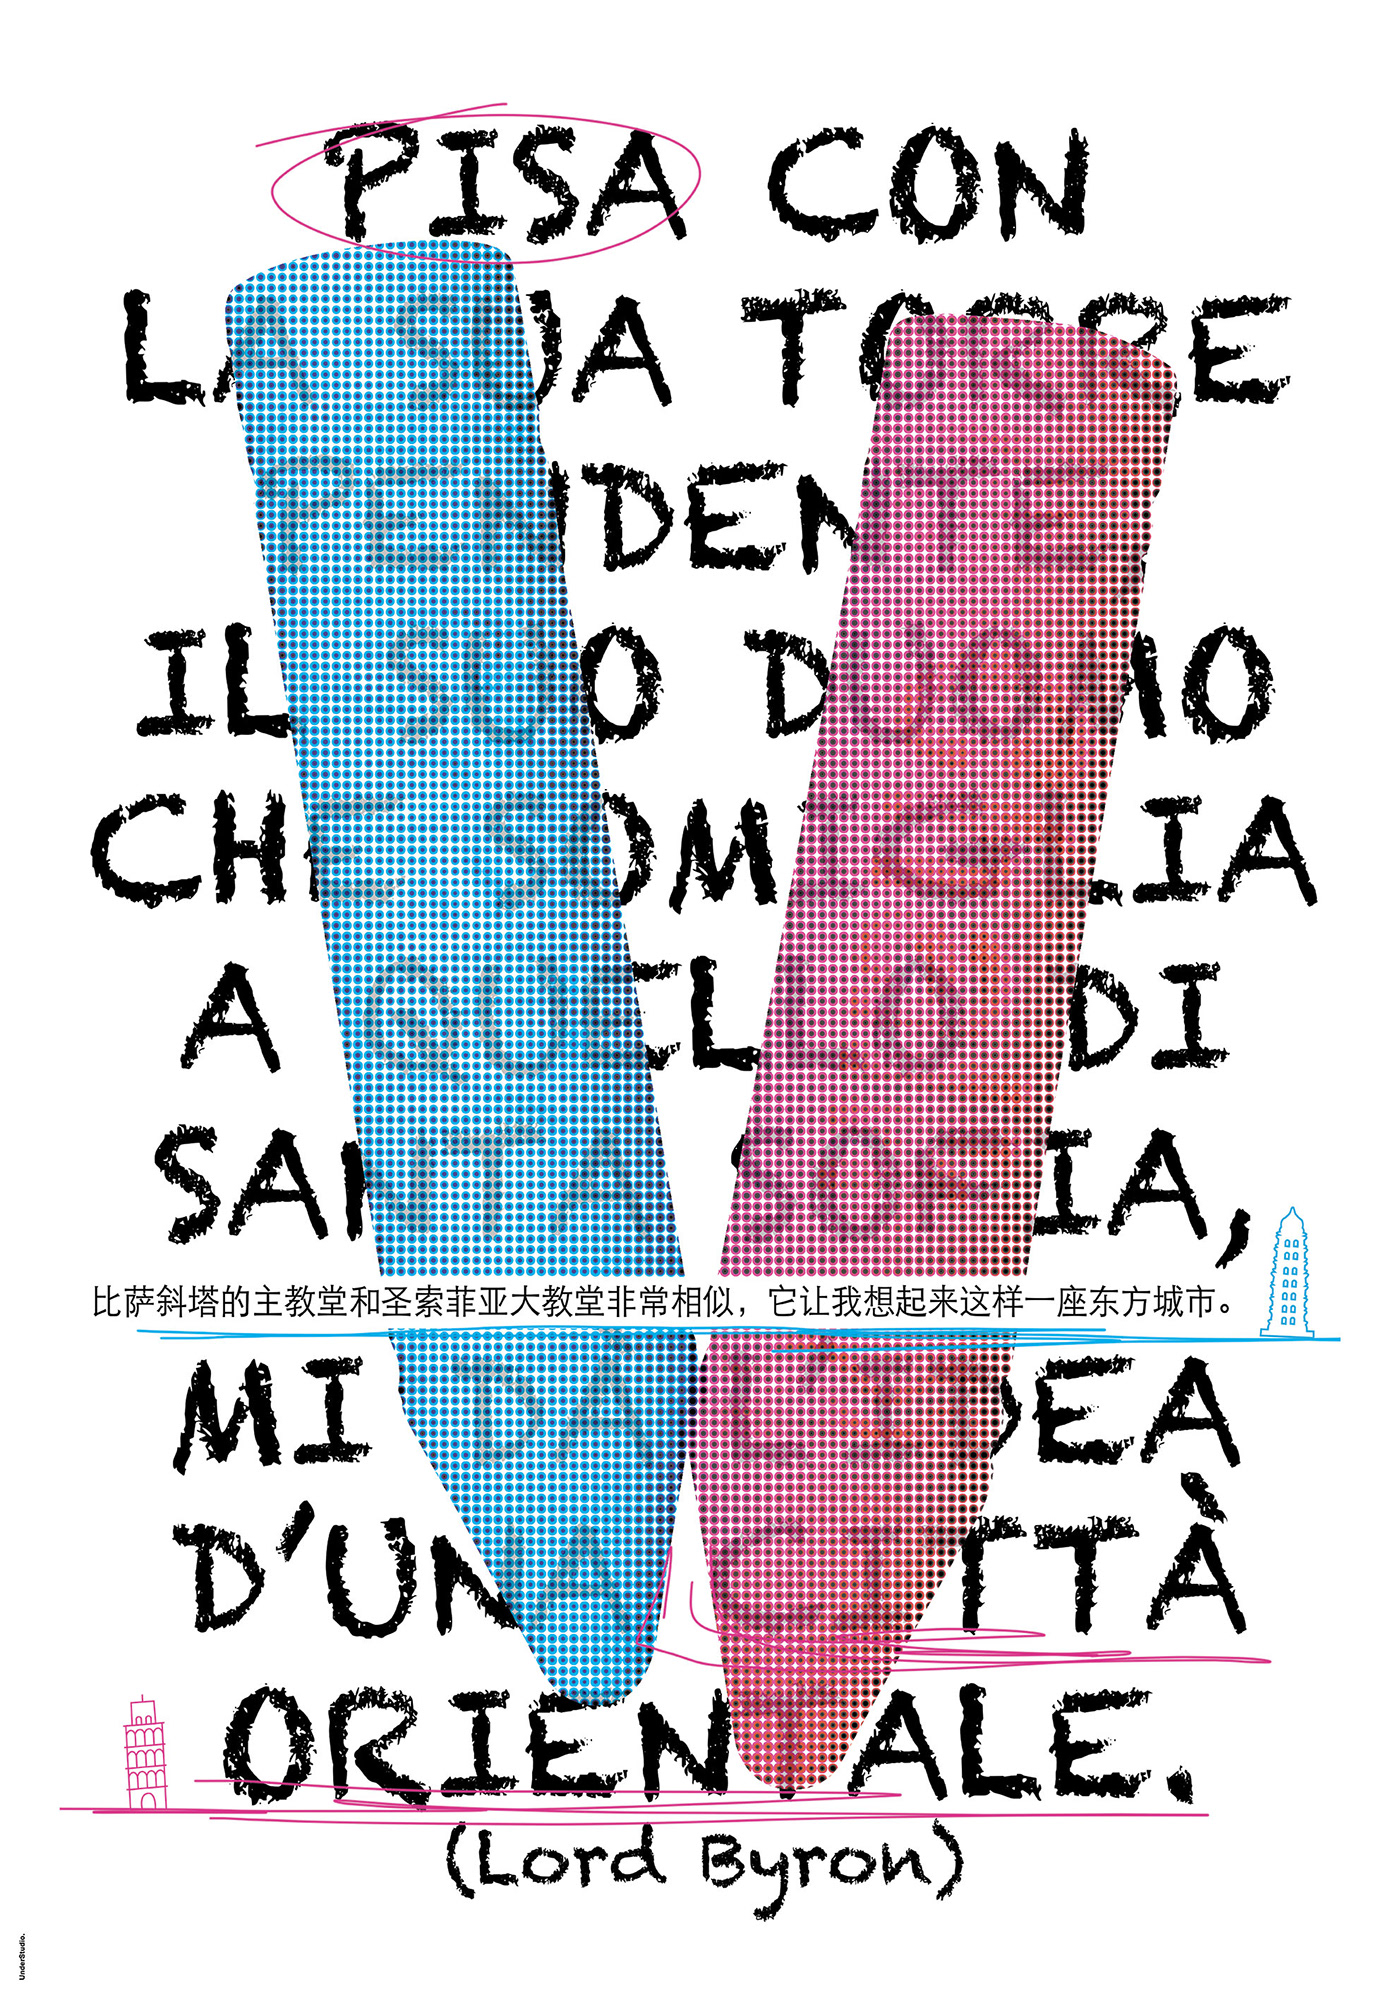 Two Leaning Towers Exhibition 2019 Pisa Exhibition  Poster Design Francesco Mazzenga china cina ILLUSTRATION 